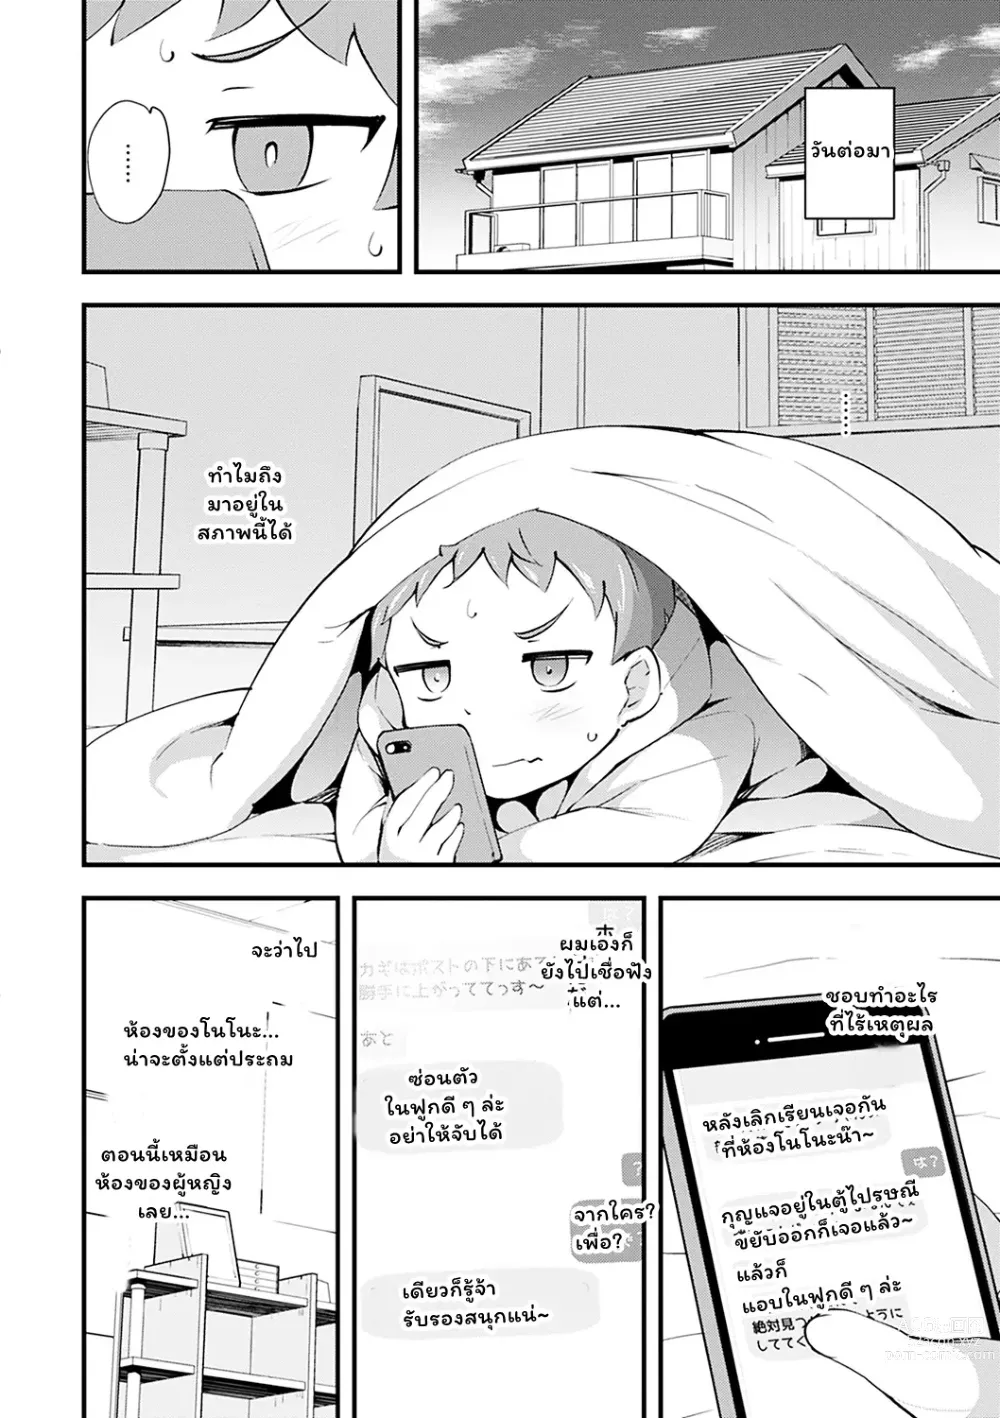 Page 4 of manga ナイショのえっちけんがく